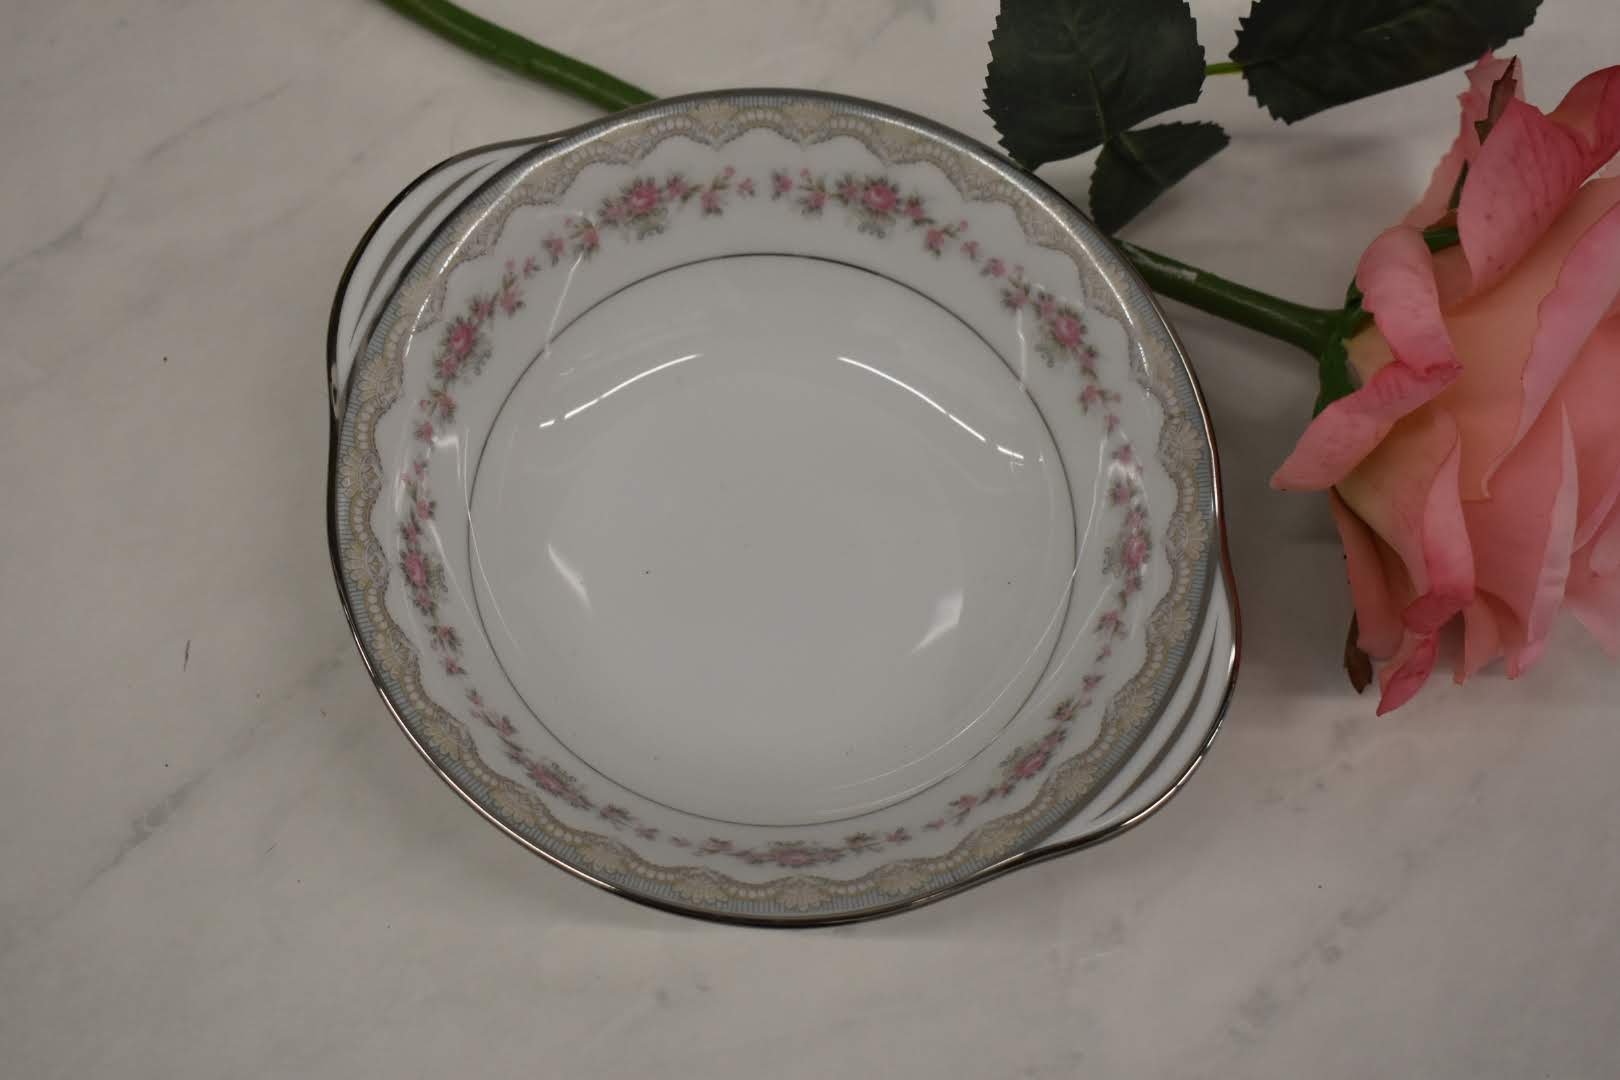 Noritake Glenwood - Fine Porcelain China - Platinum Rim - 5770 pattern - Small Round Vegetable Bowl with Handles